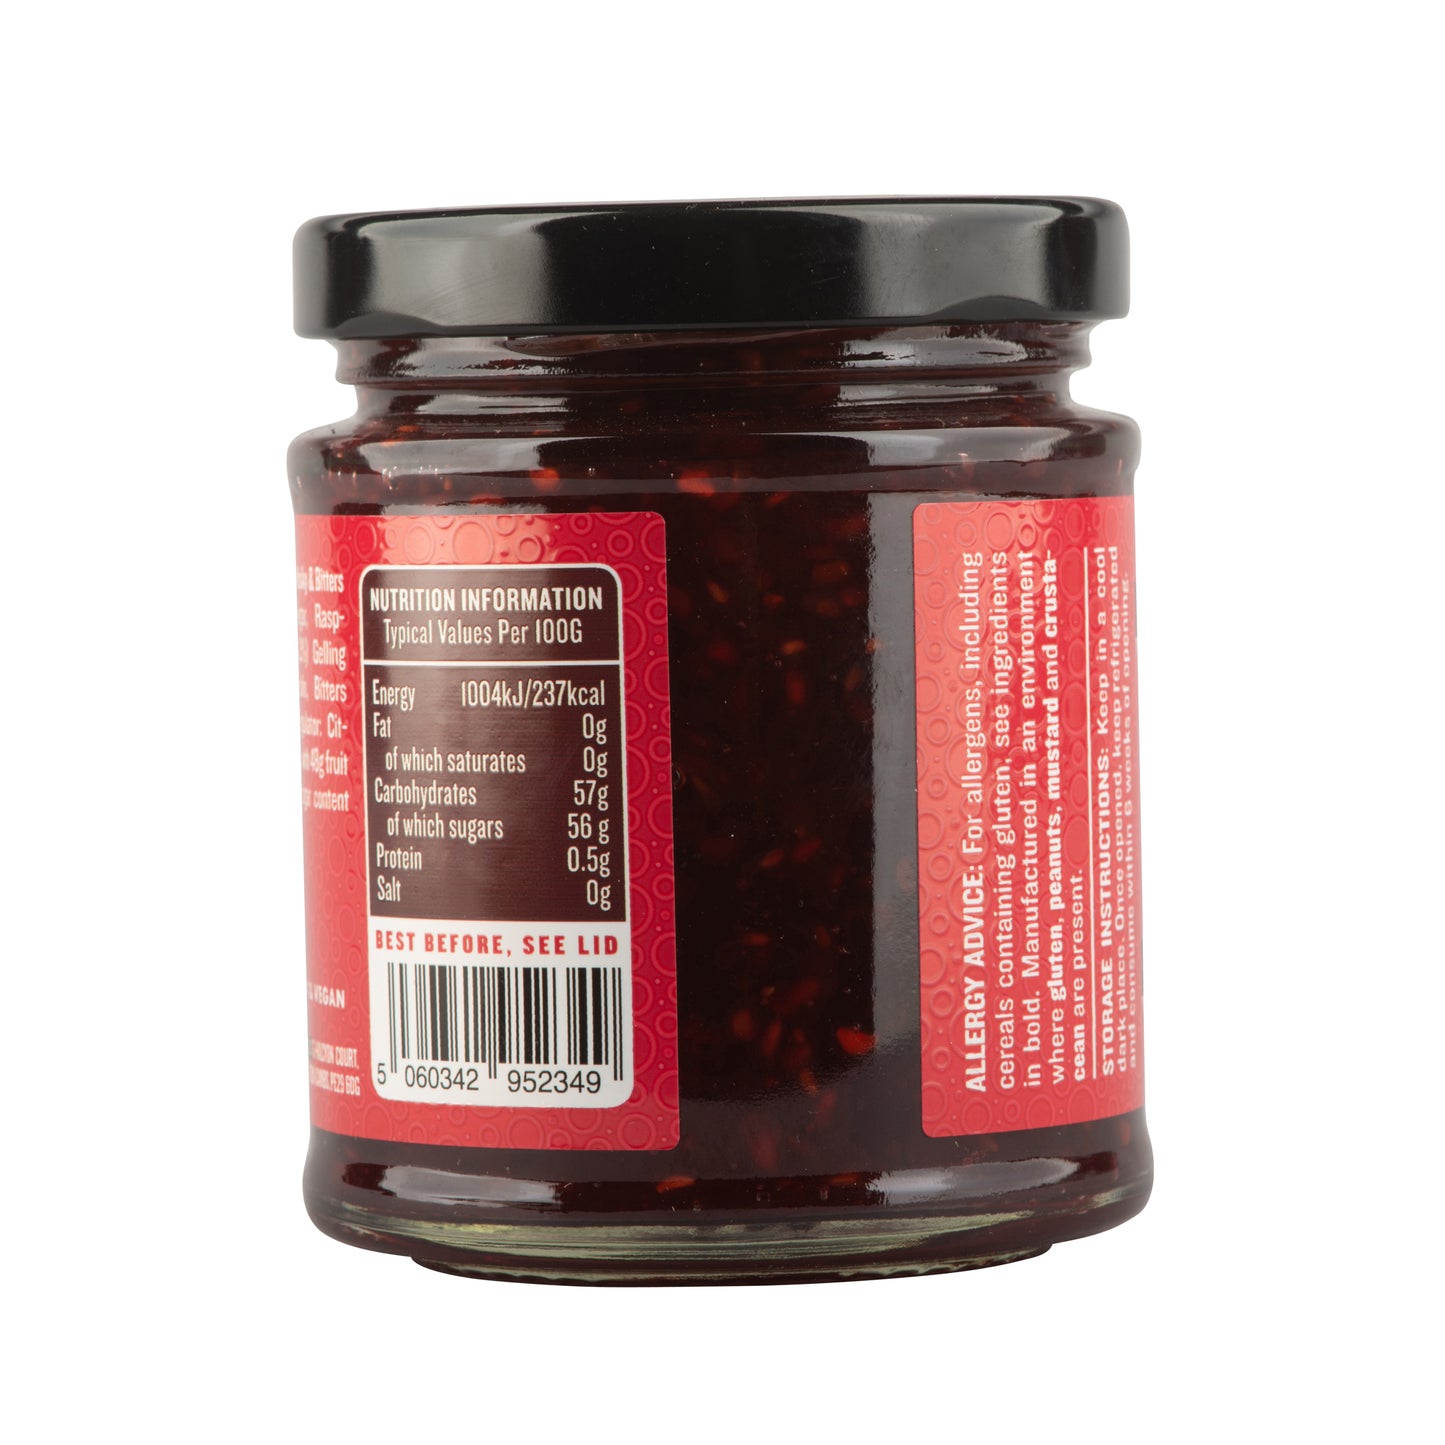 Raspberry Old Fashioned Jam